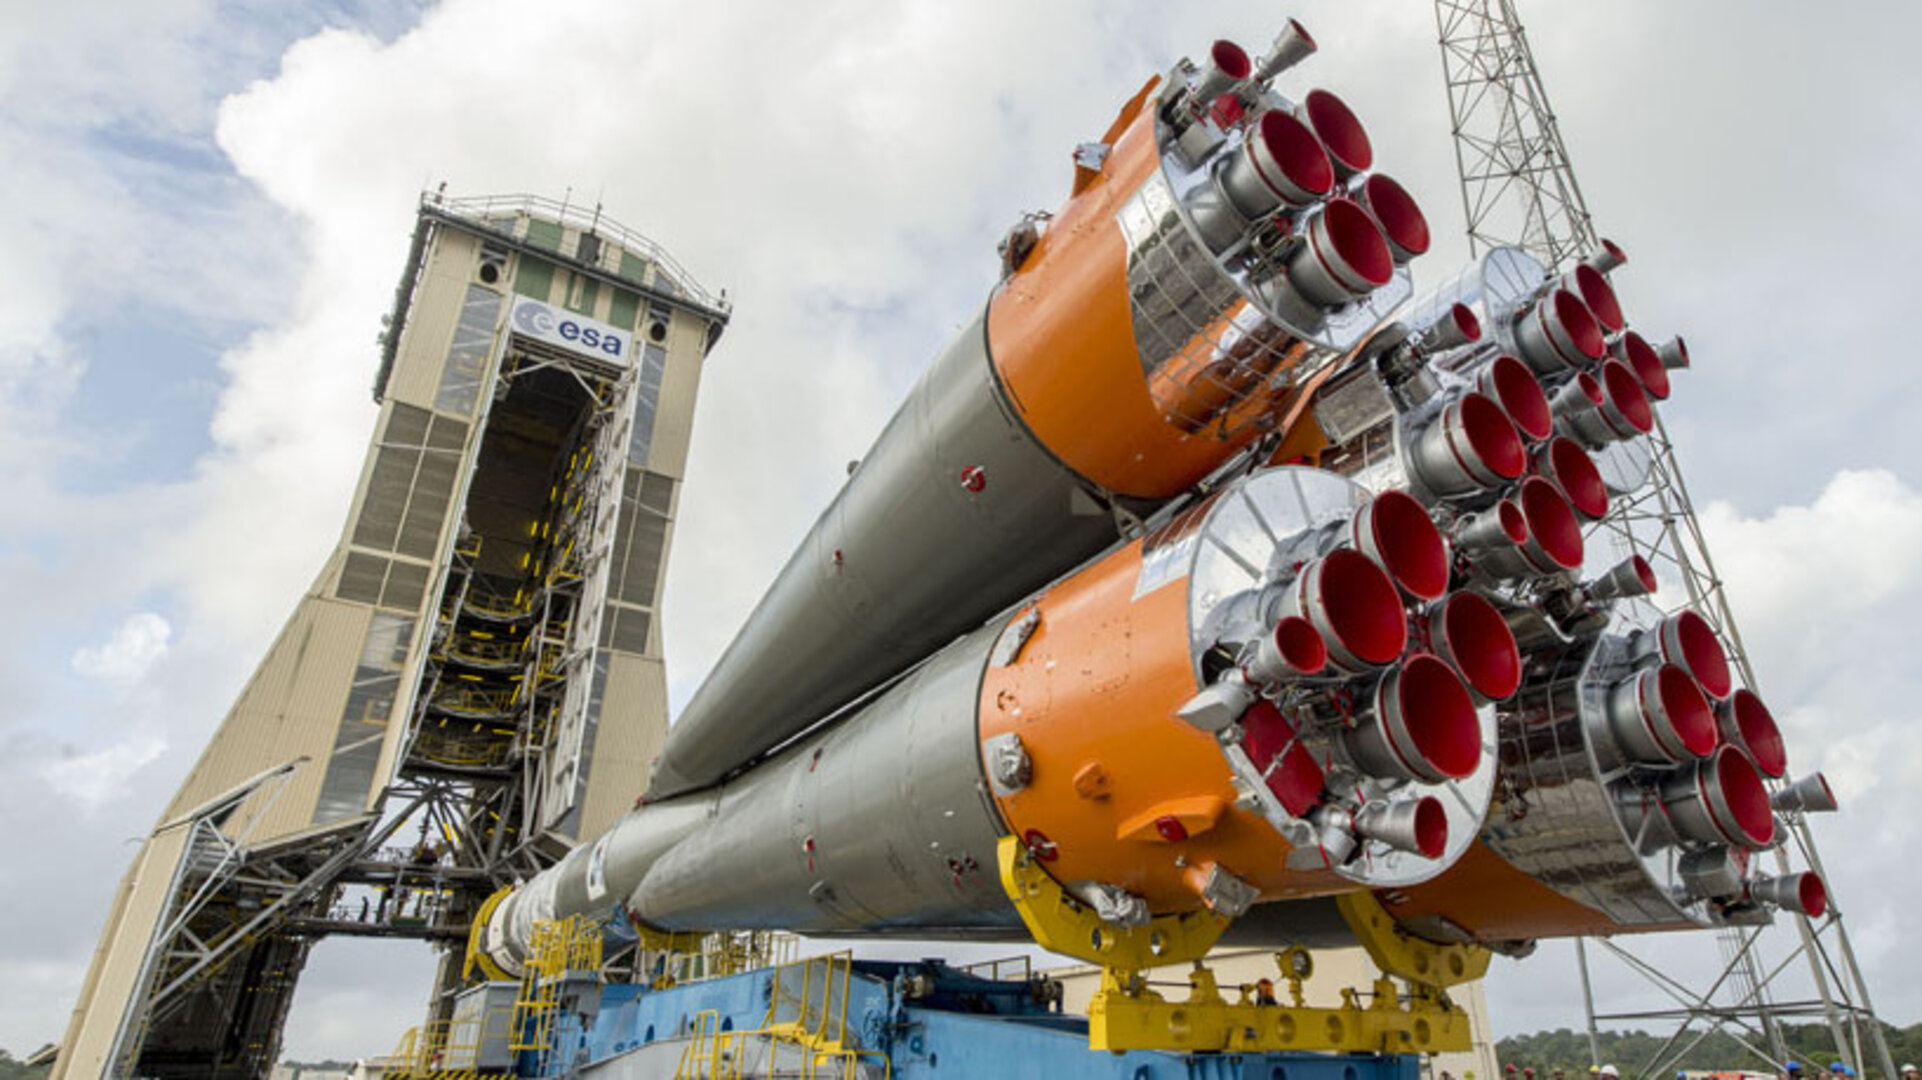 Nosná raketa Sojuz pro družice Galileo